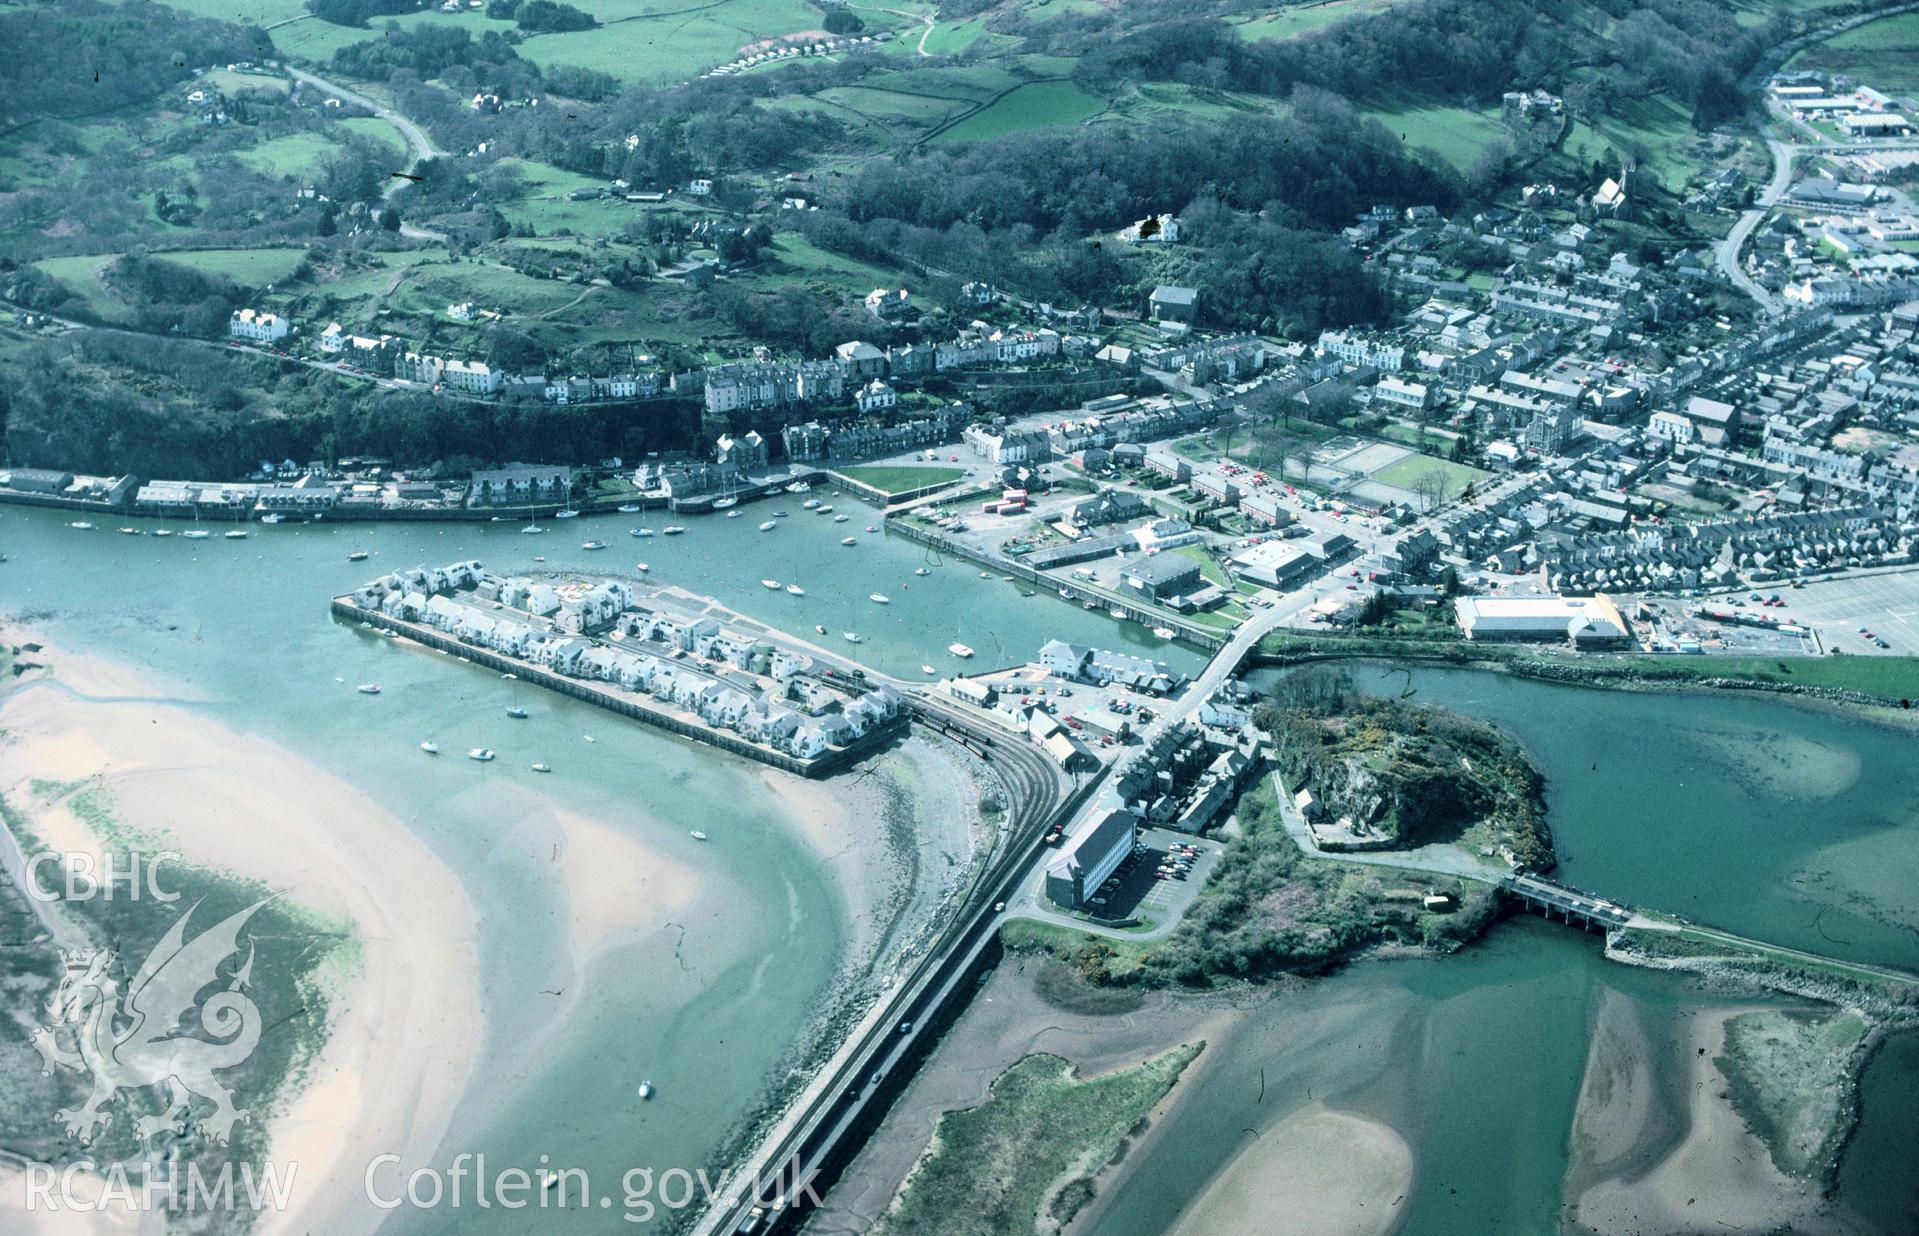 Slide of RCAHMW colour oblique aerial photograph of Portmadog Harbour, taken by C.R. Musson, 1/4/1990.